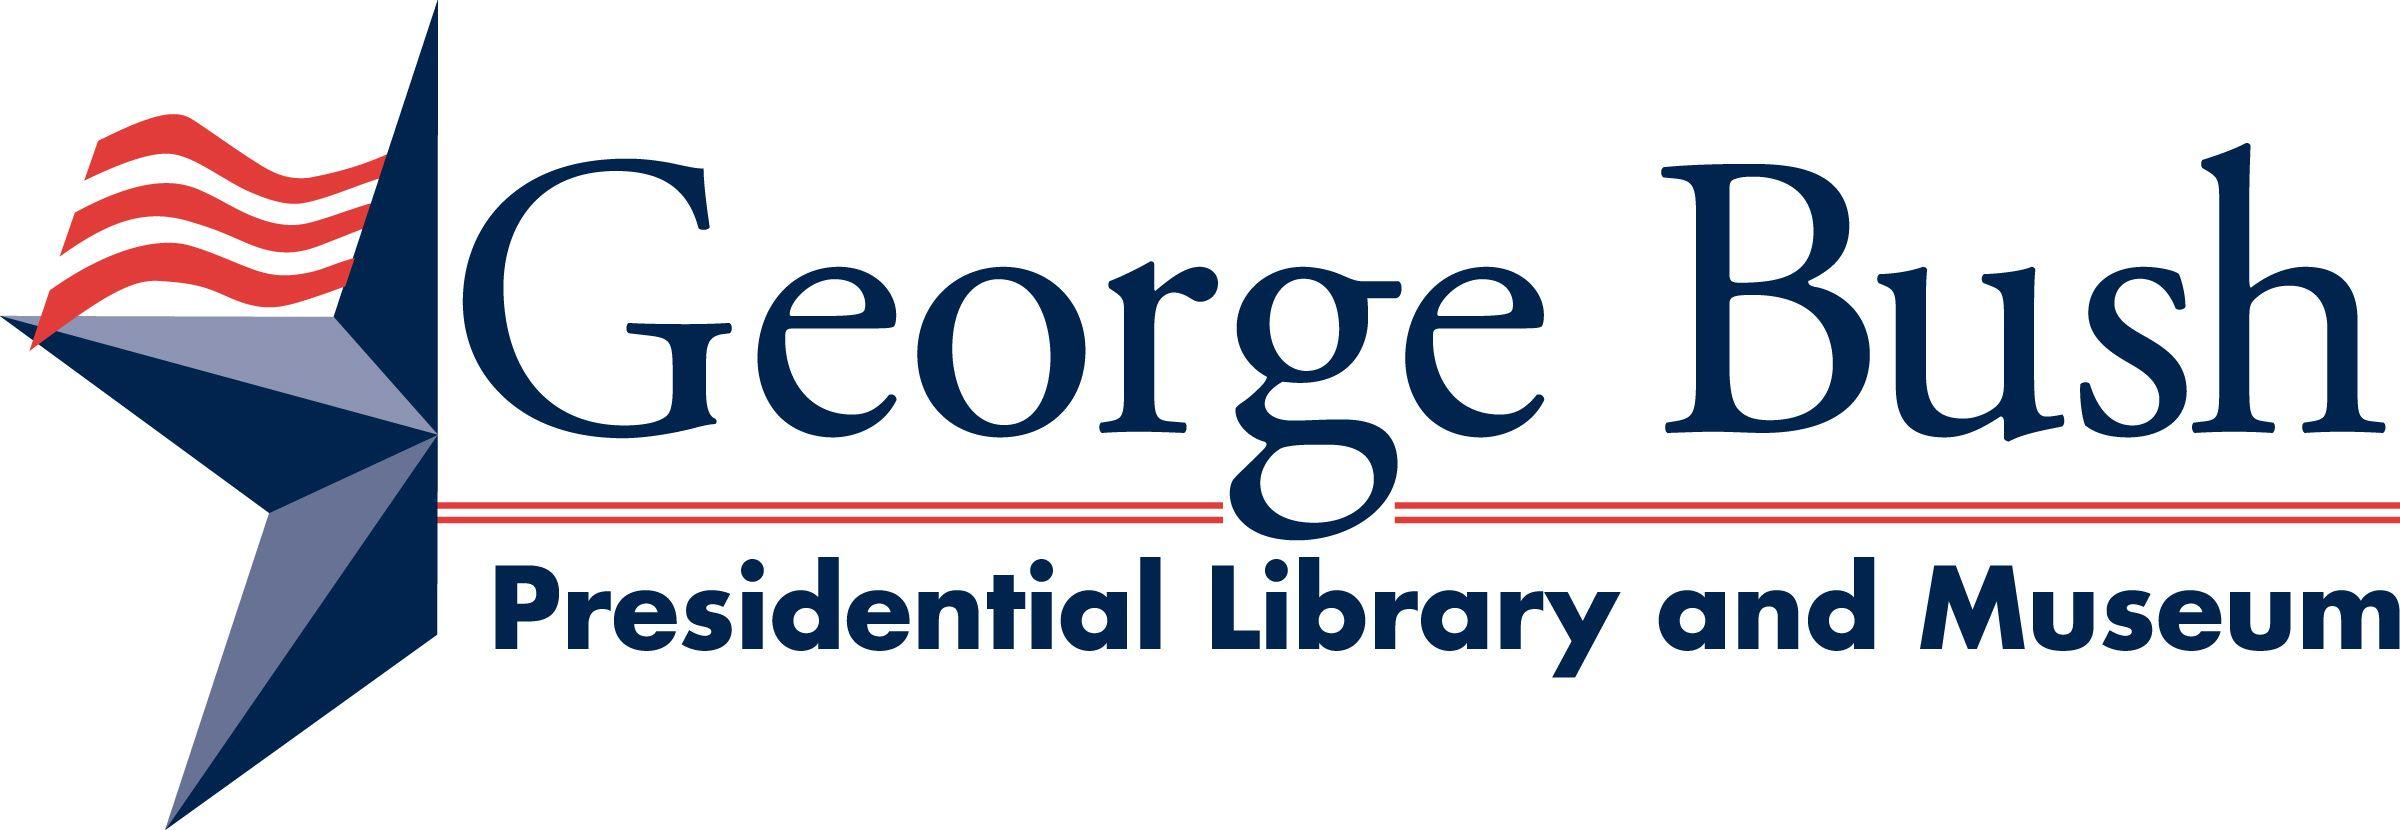 Bush Logo - File:Official logo of the George Bush Presidential Library.jpg ...